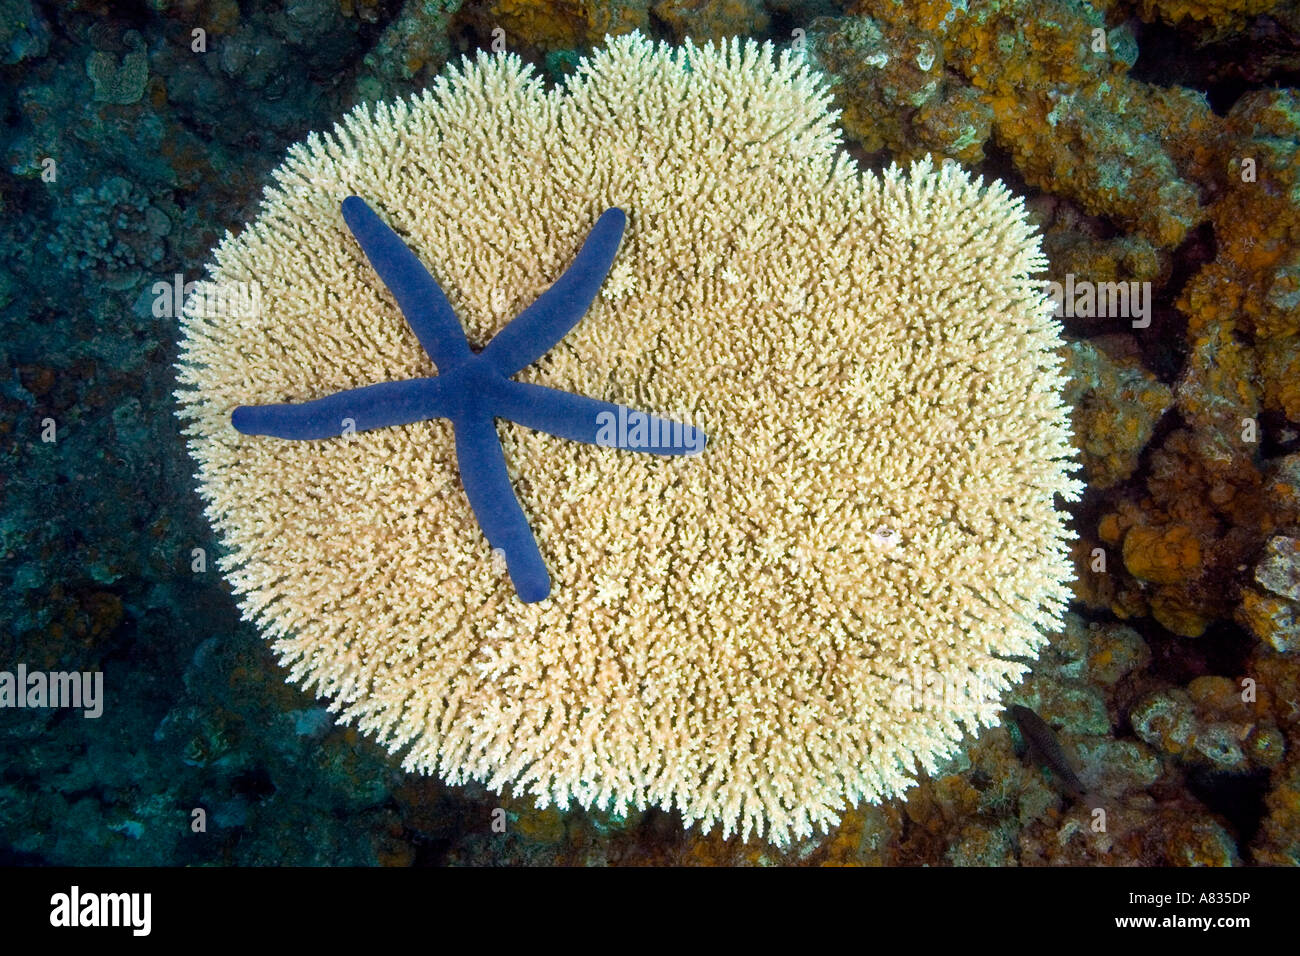 This seastar, starfish, Linckia laevigata, is pictured on a hard plate coral off Vanua Levu Island, Fiji. Stock Photo